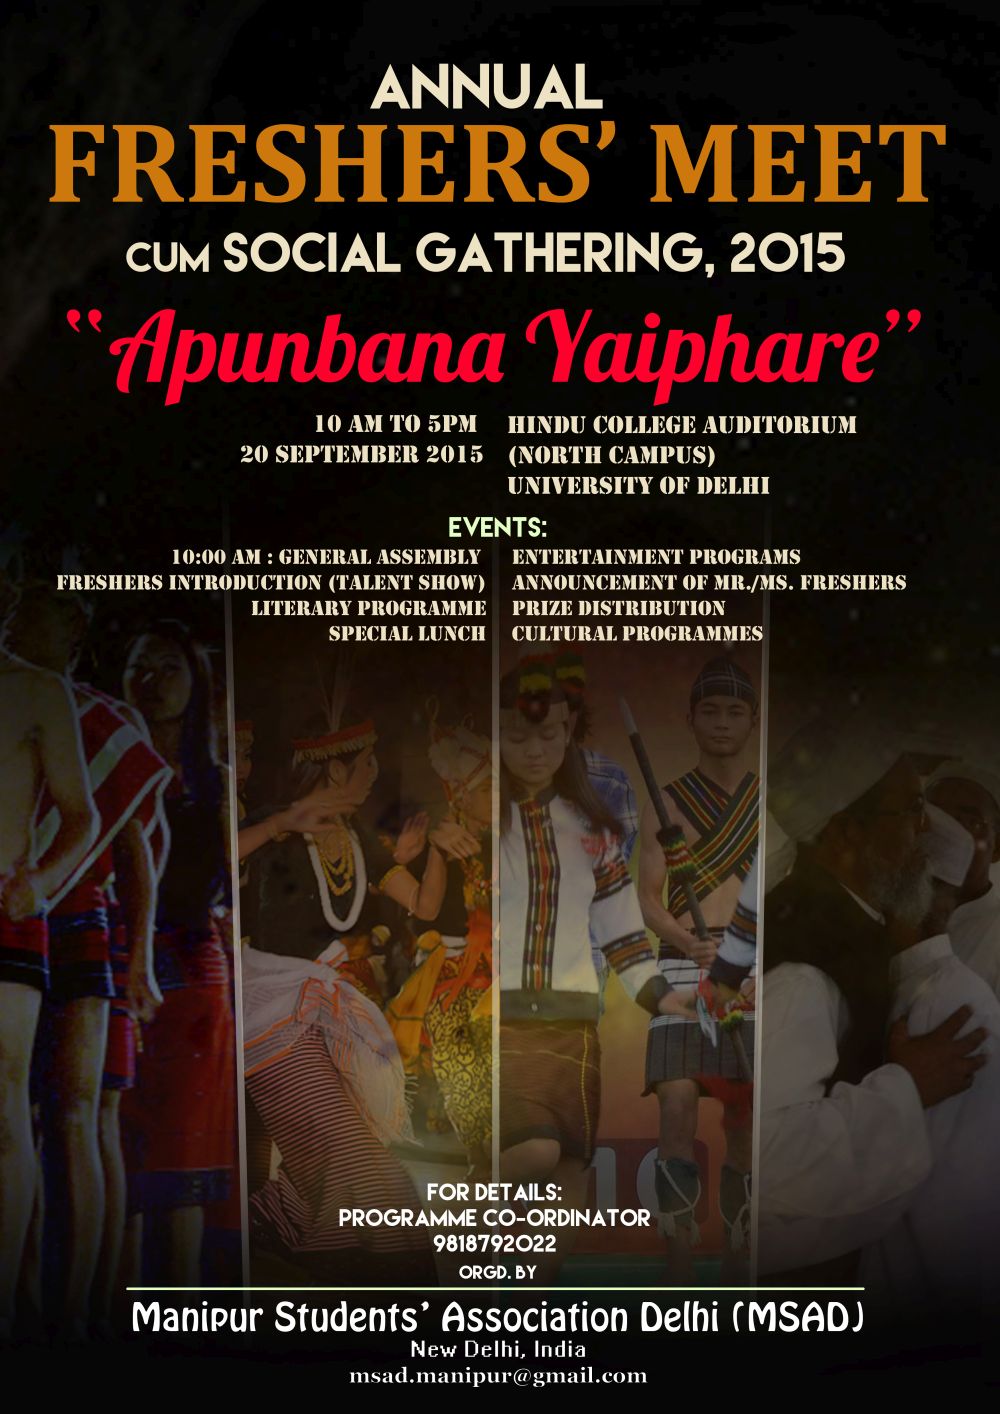 MSAD Annual Freshers' Meet cum Social Gathering 2015